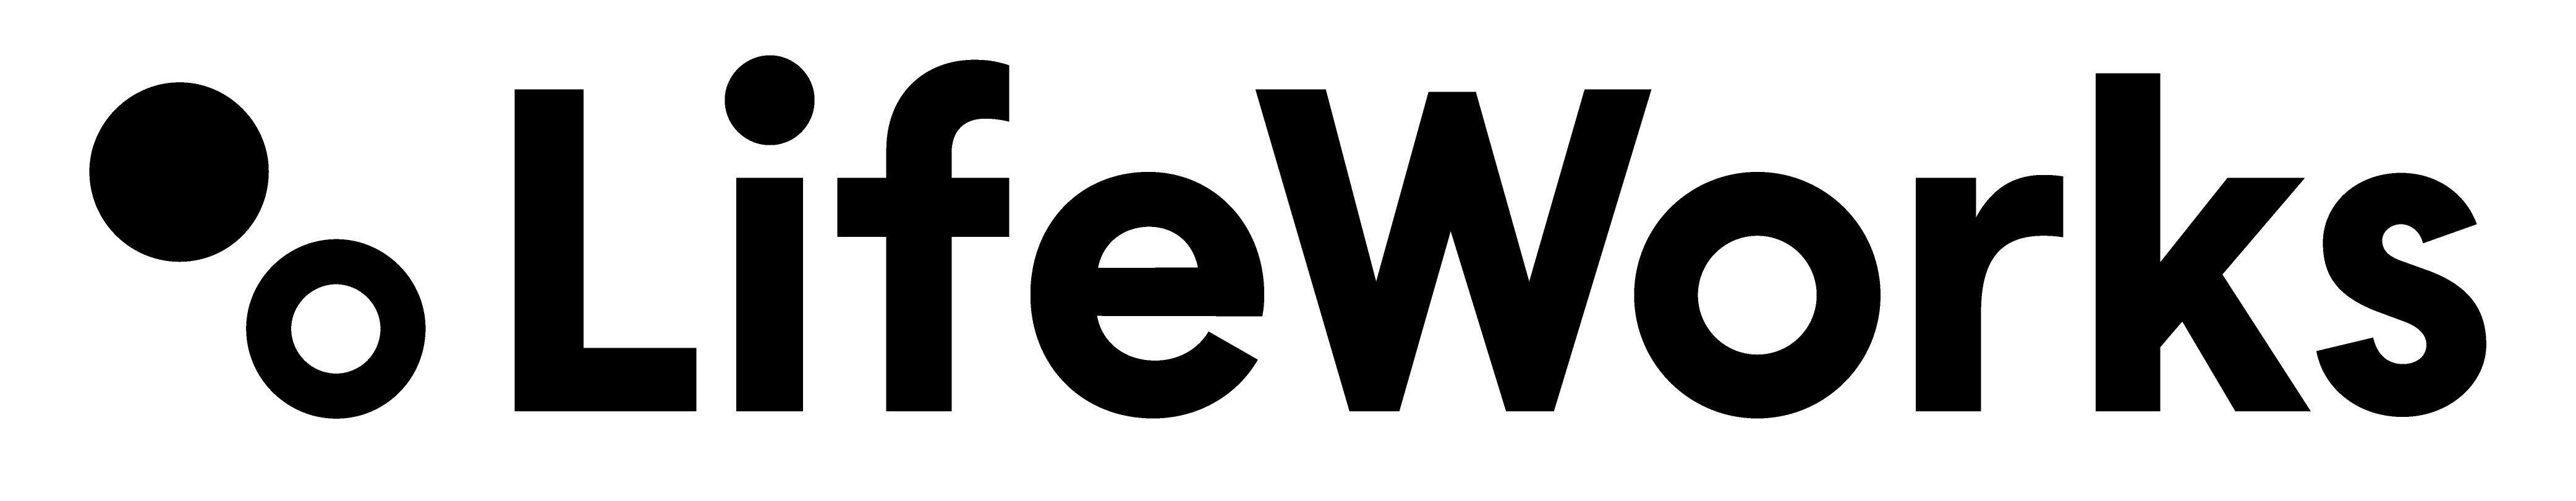 logo-png-black